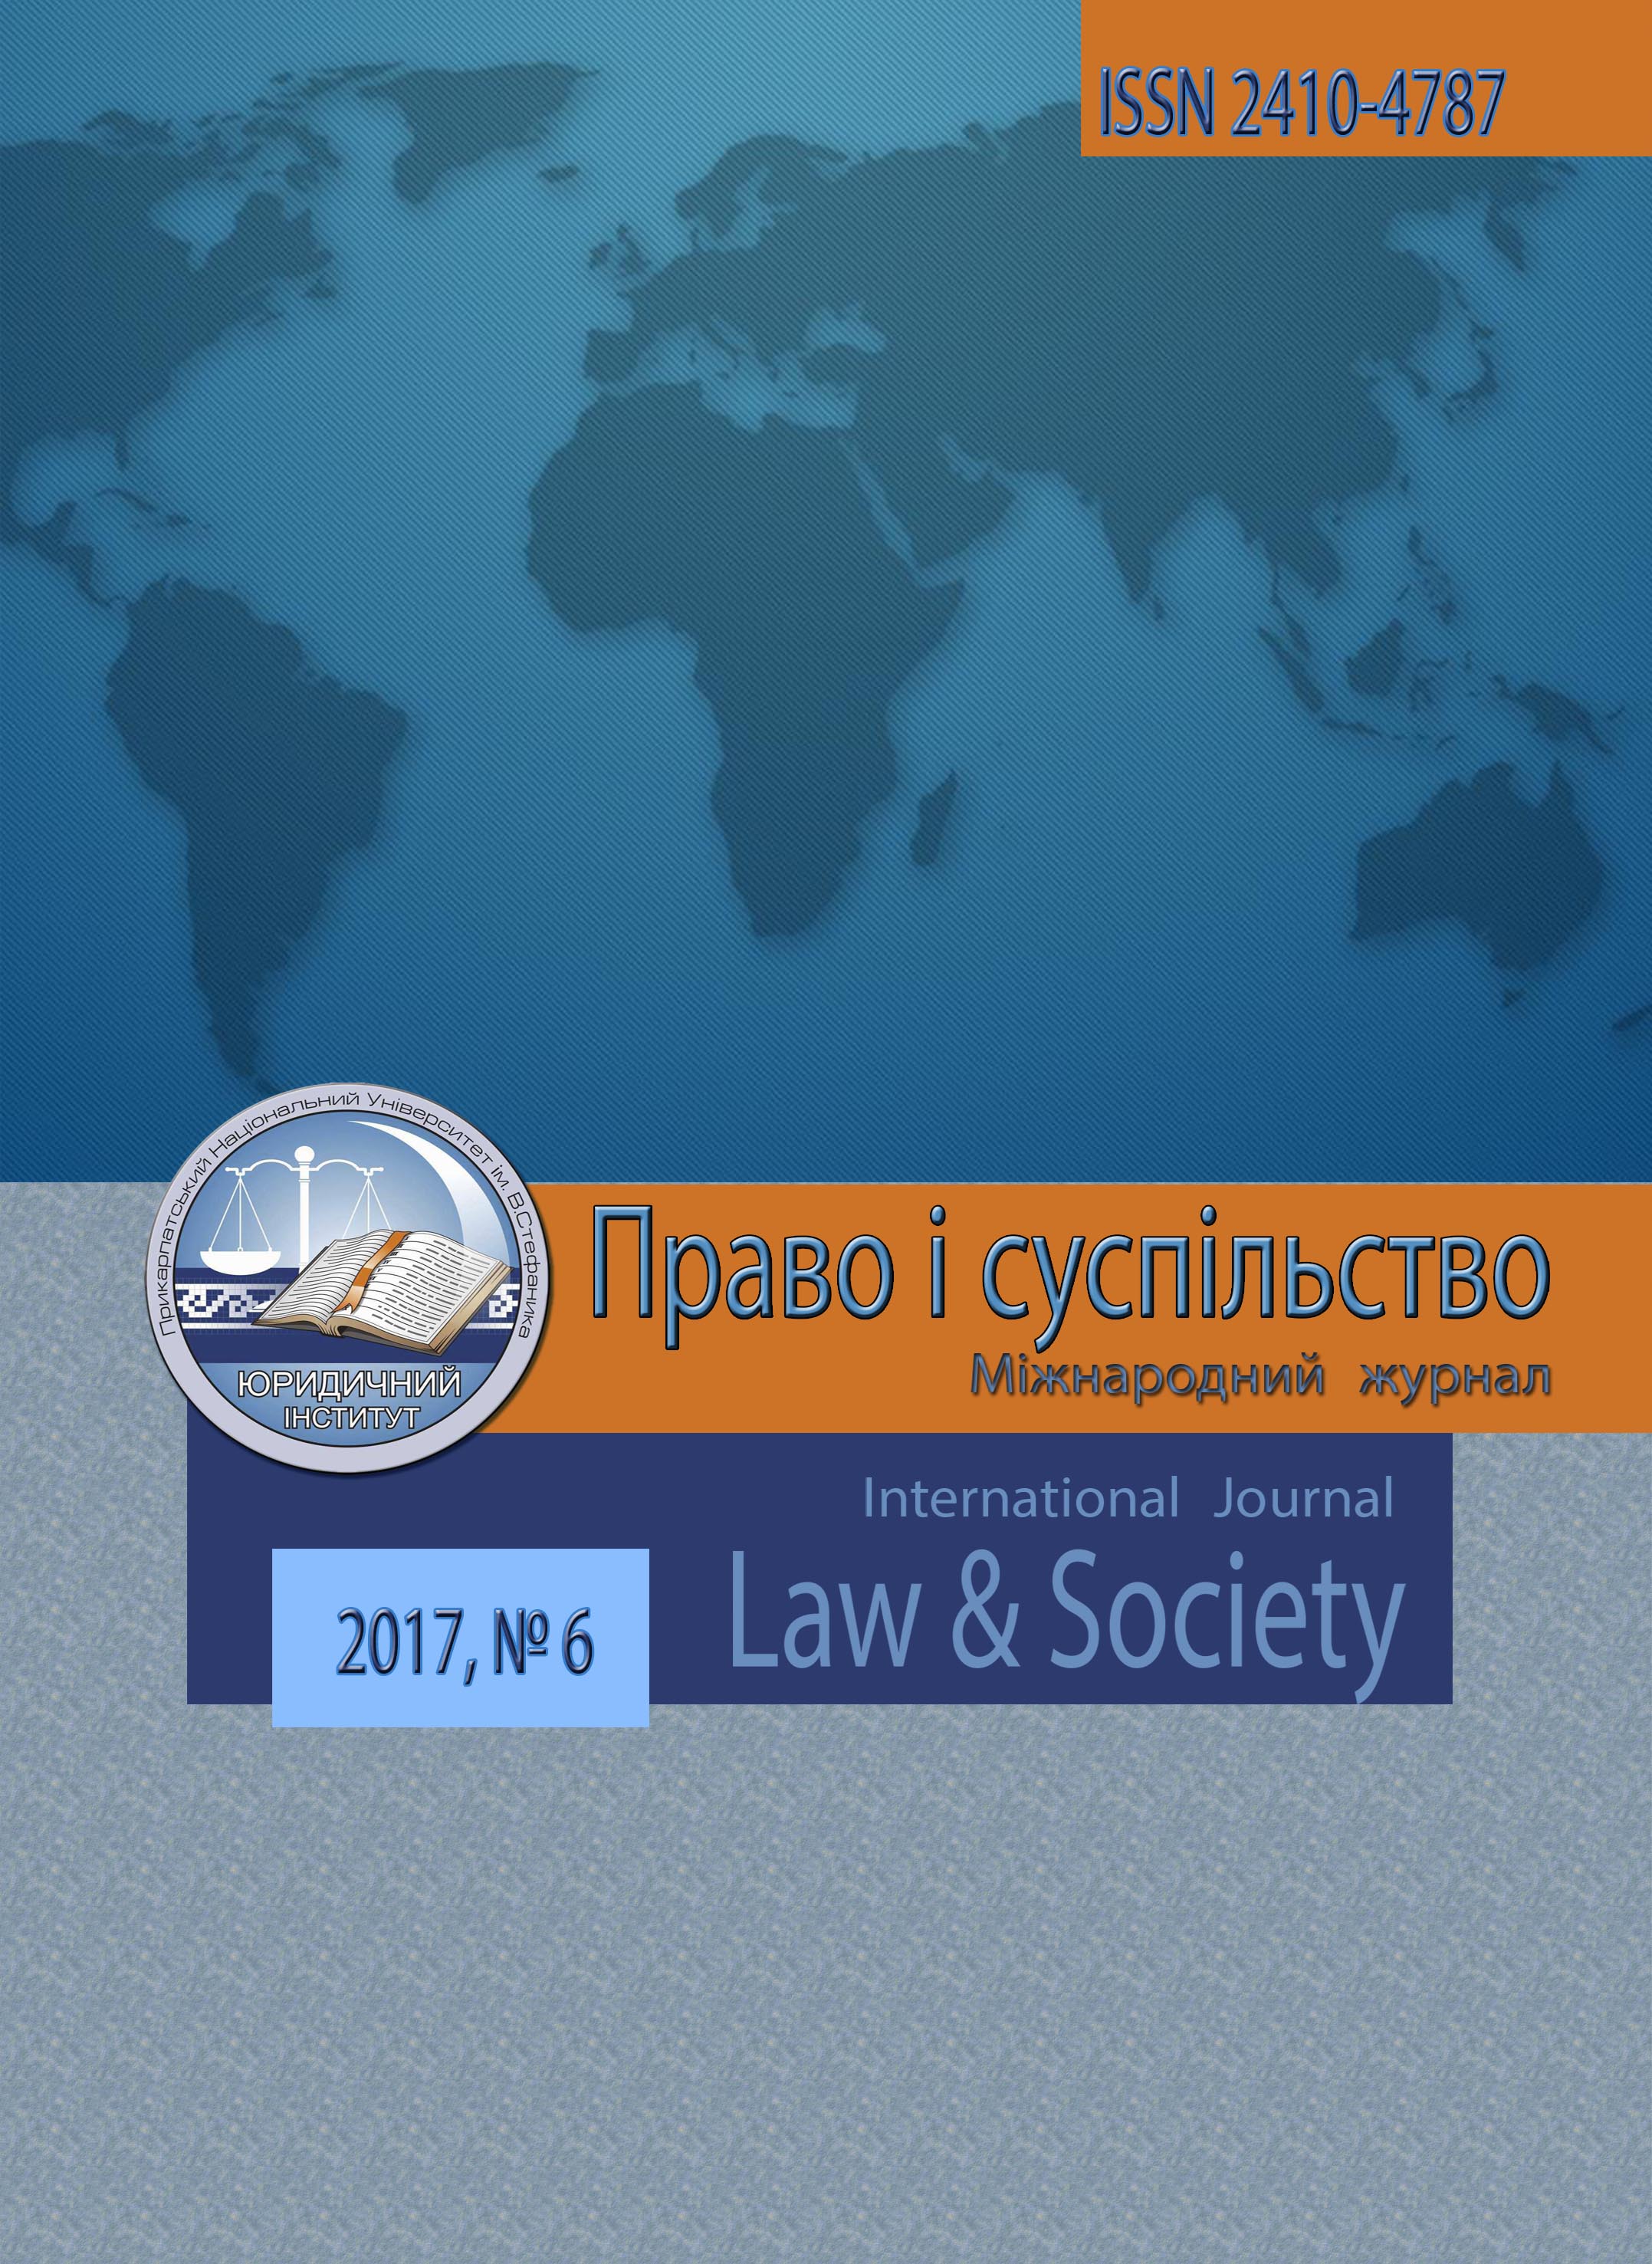 					View Vol. 6 (2017): Law&Society
				